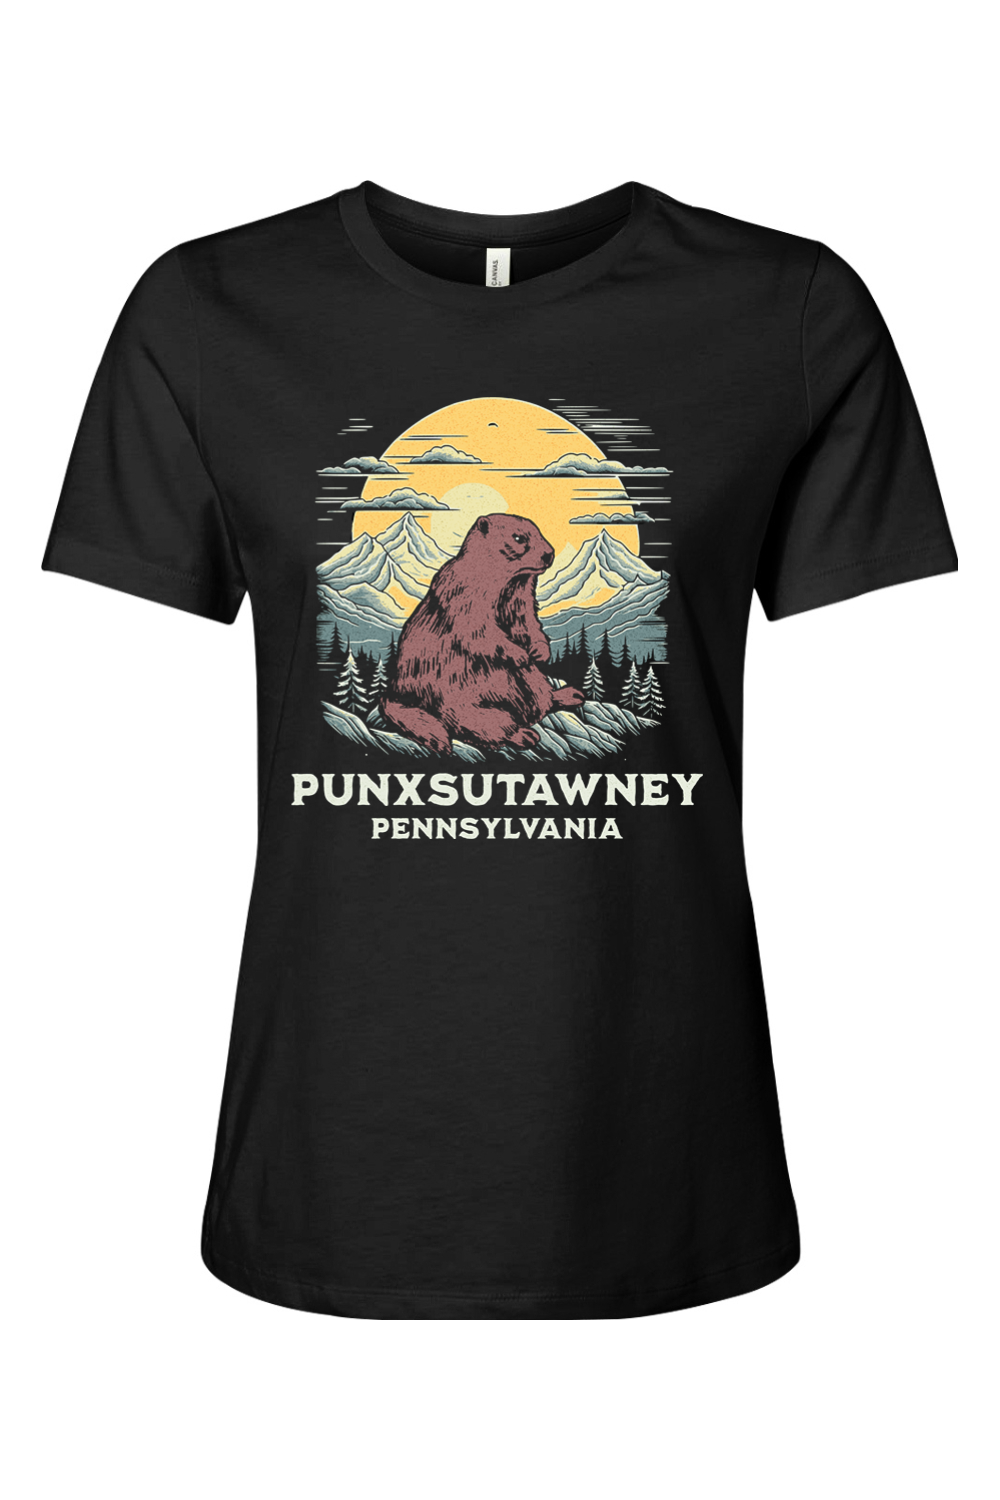 Punxsutawney Pennsylvania - Ladies Tee - Yinzylvania